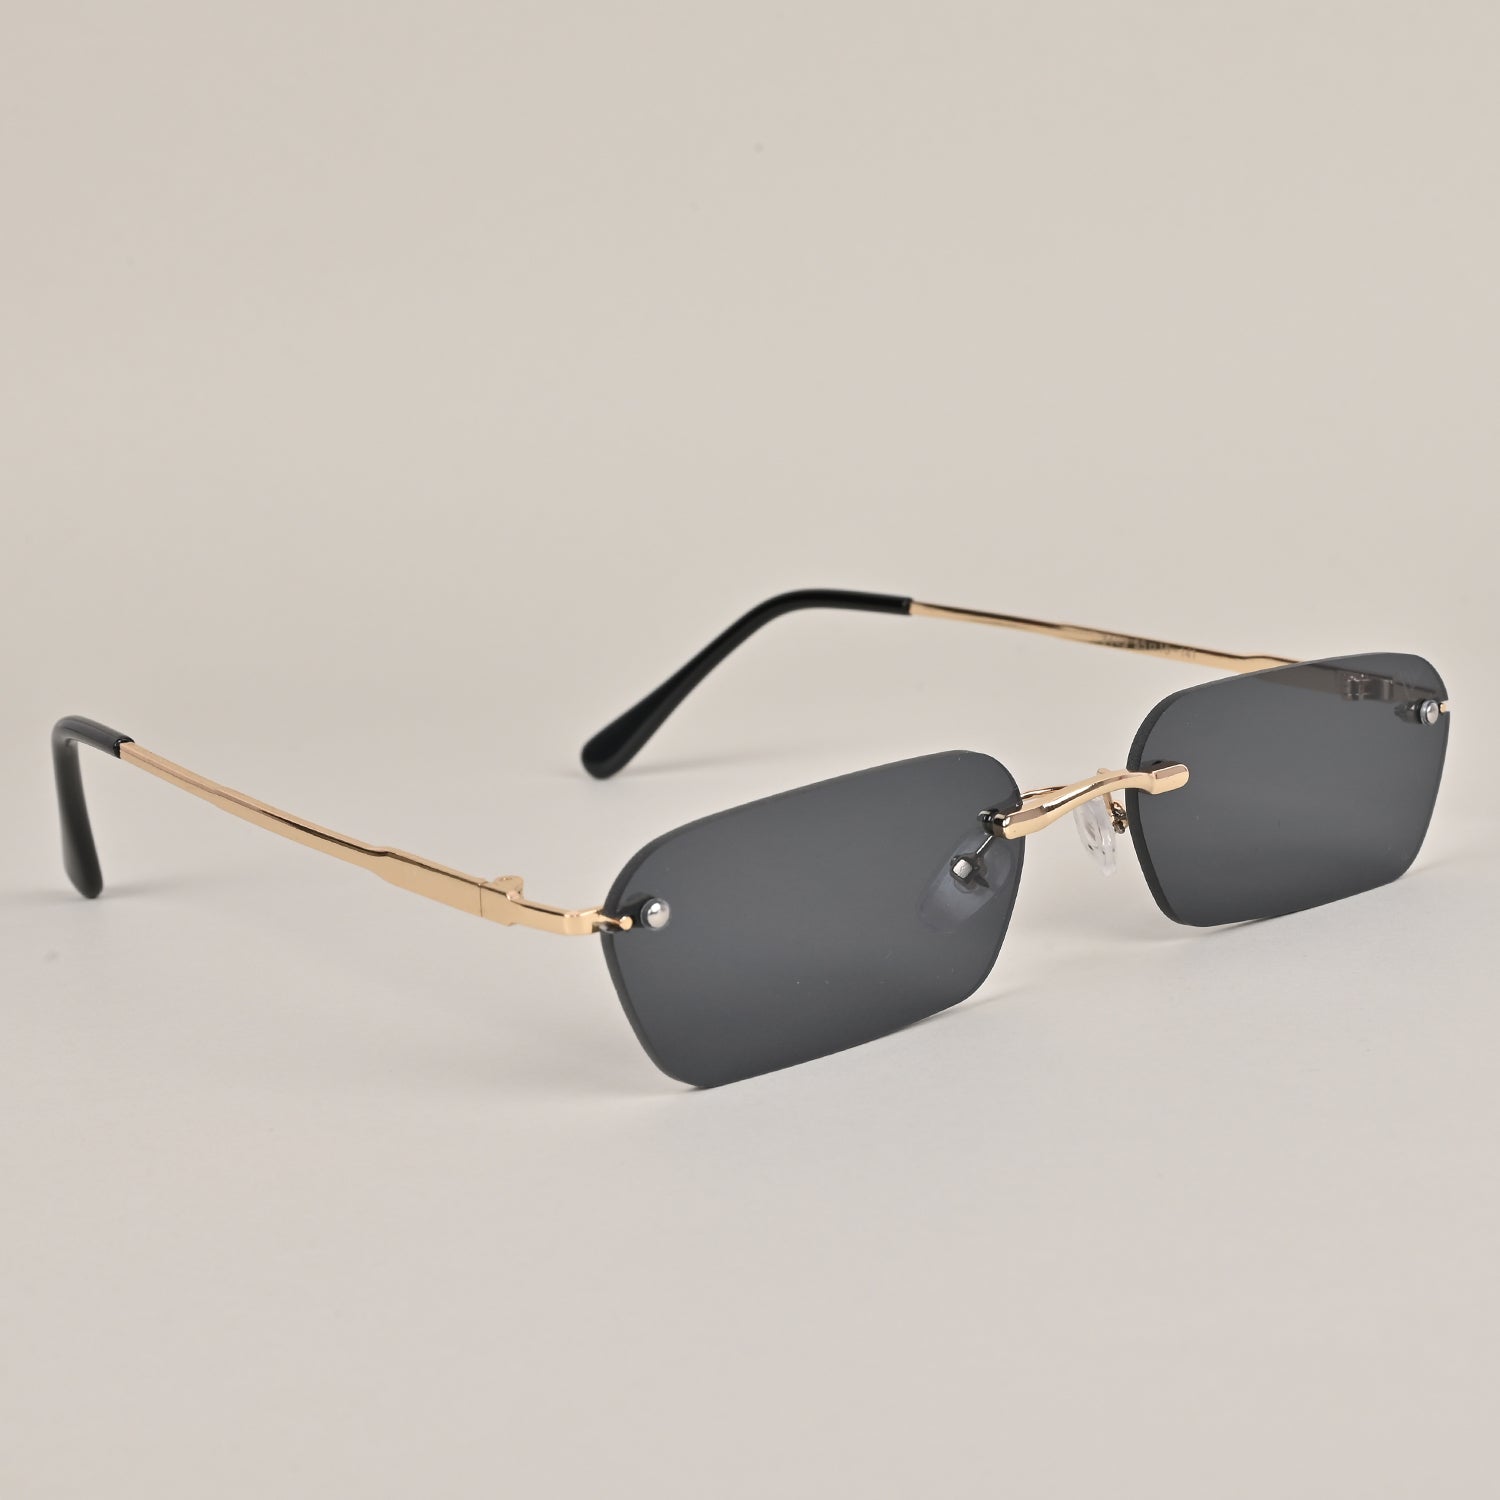 Voyage Black Rimless Rectangle Sunglasses - MG3786